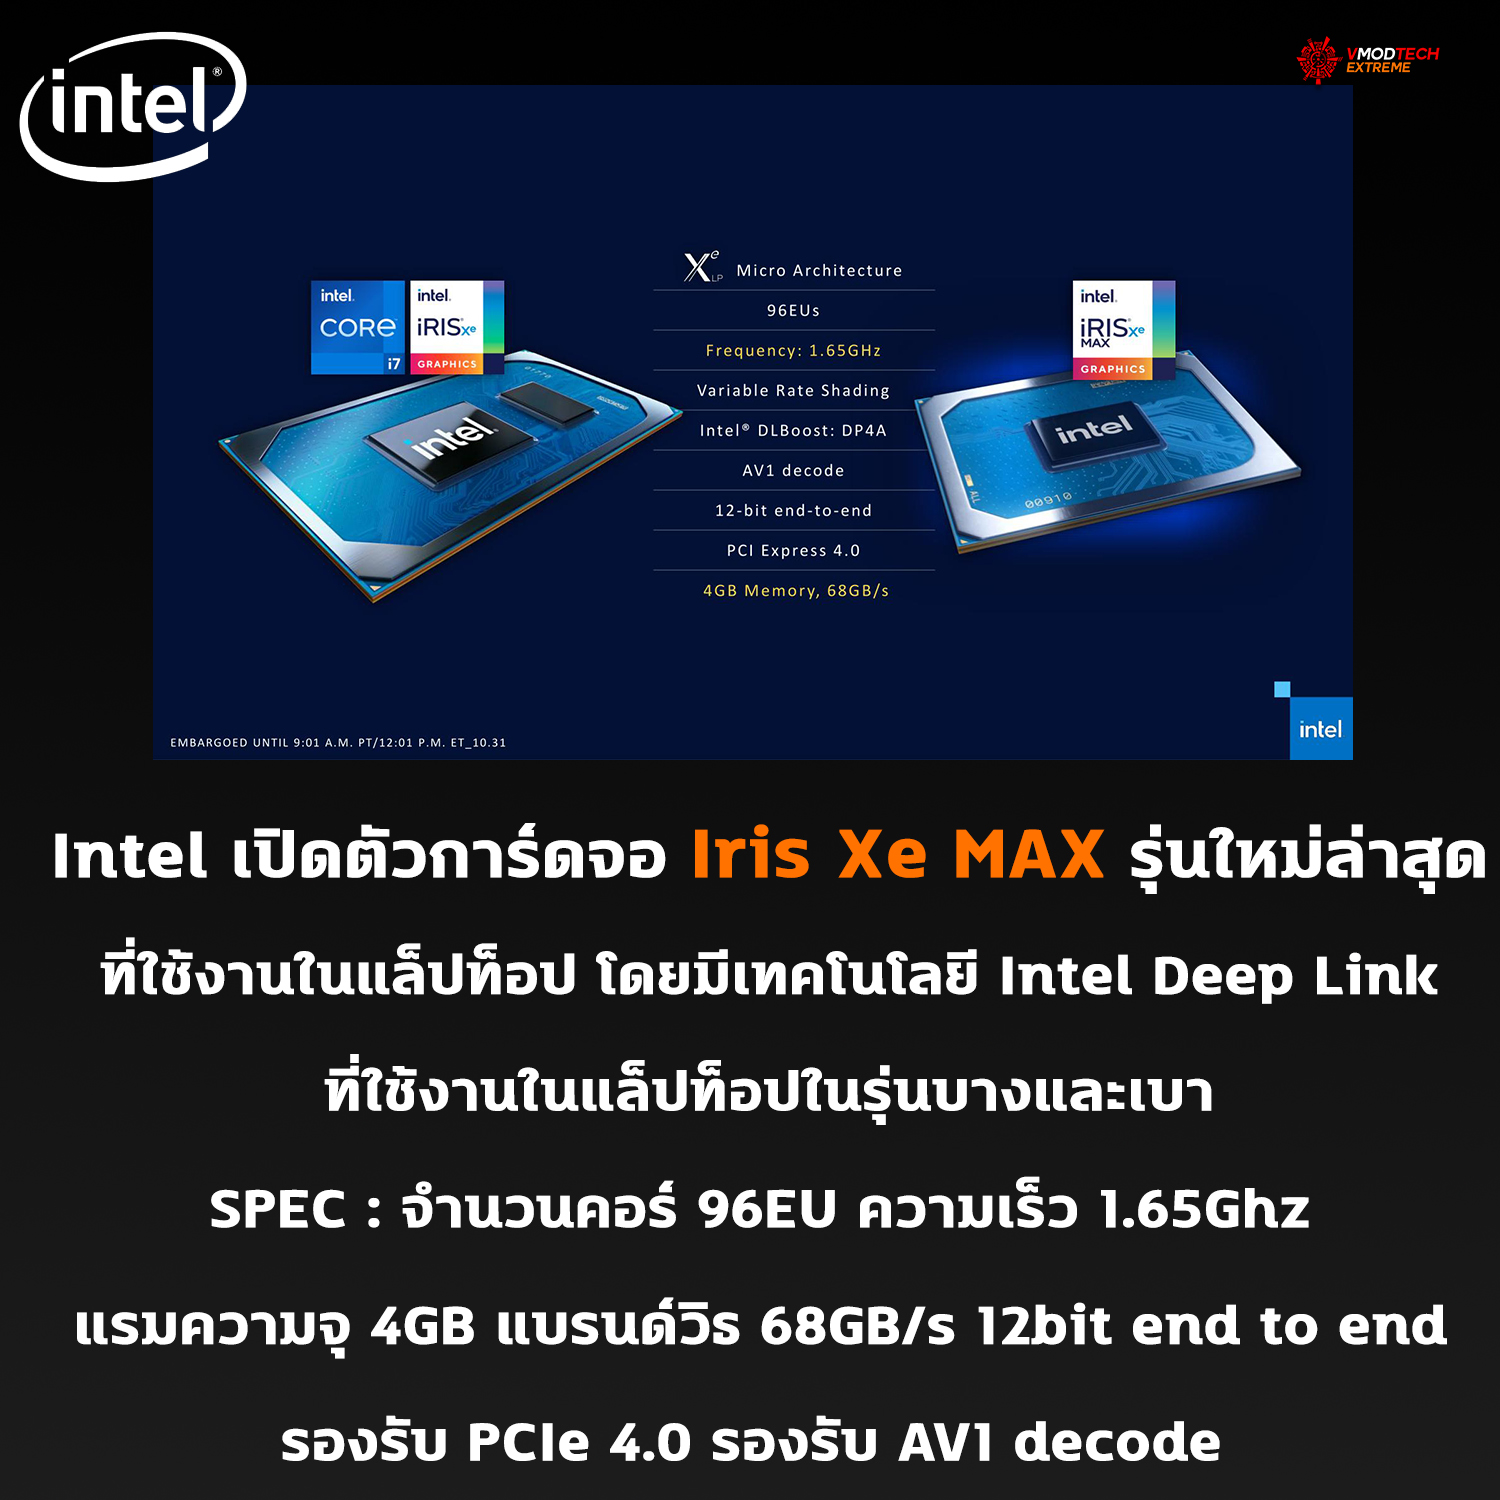 intel iris xe max 11th gen intel core1 Intel เปิดตัวการ์ดจอ Iris Xe MAX รุ่นใหม่ล่าสุดที่ใช้งานในแล็ปท็อป